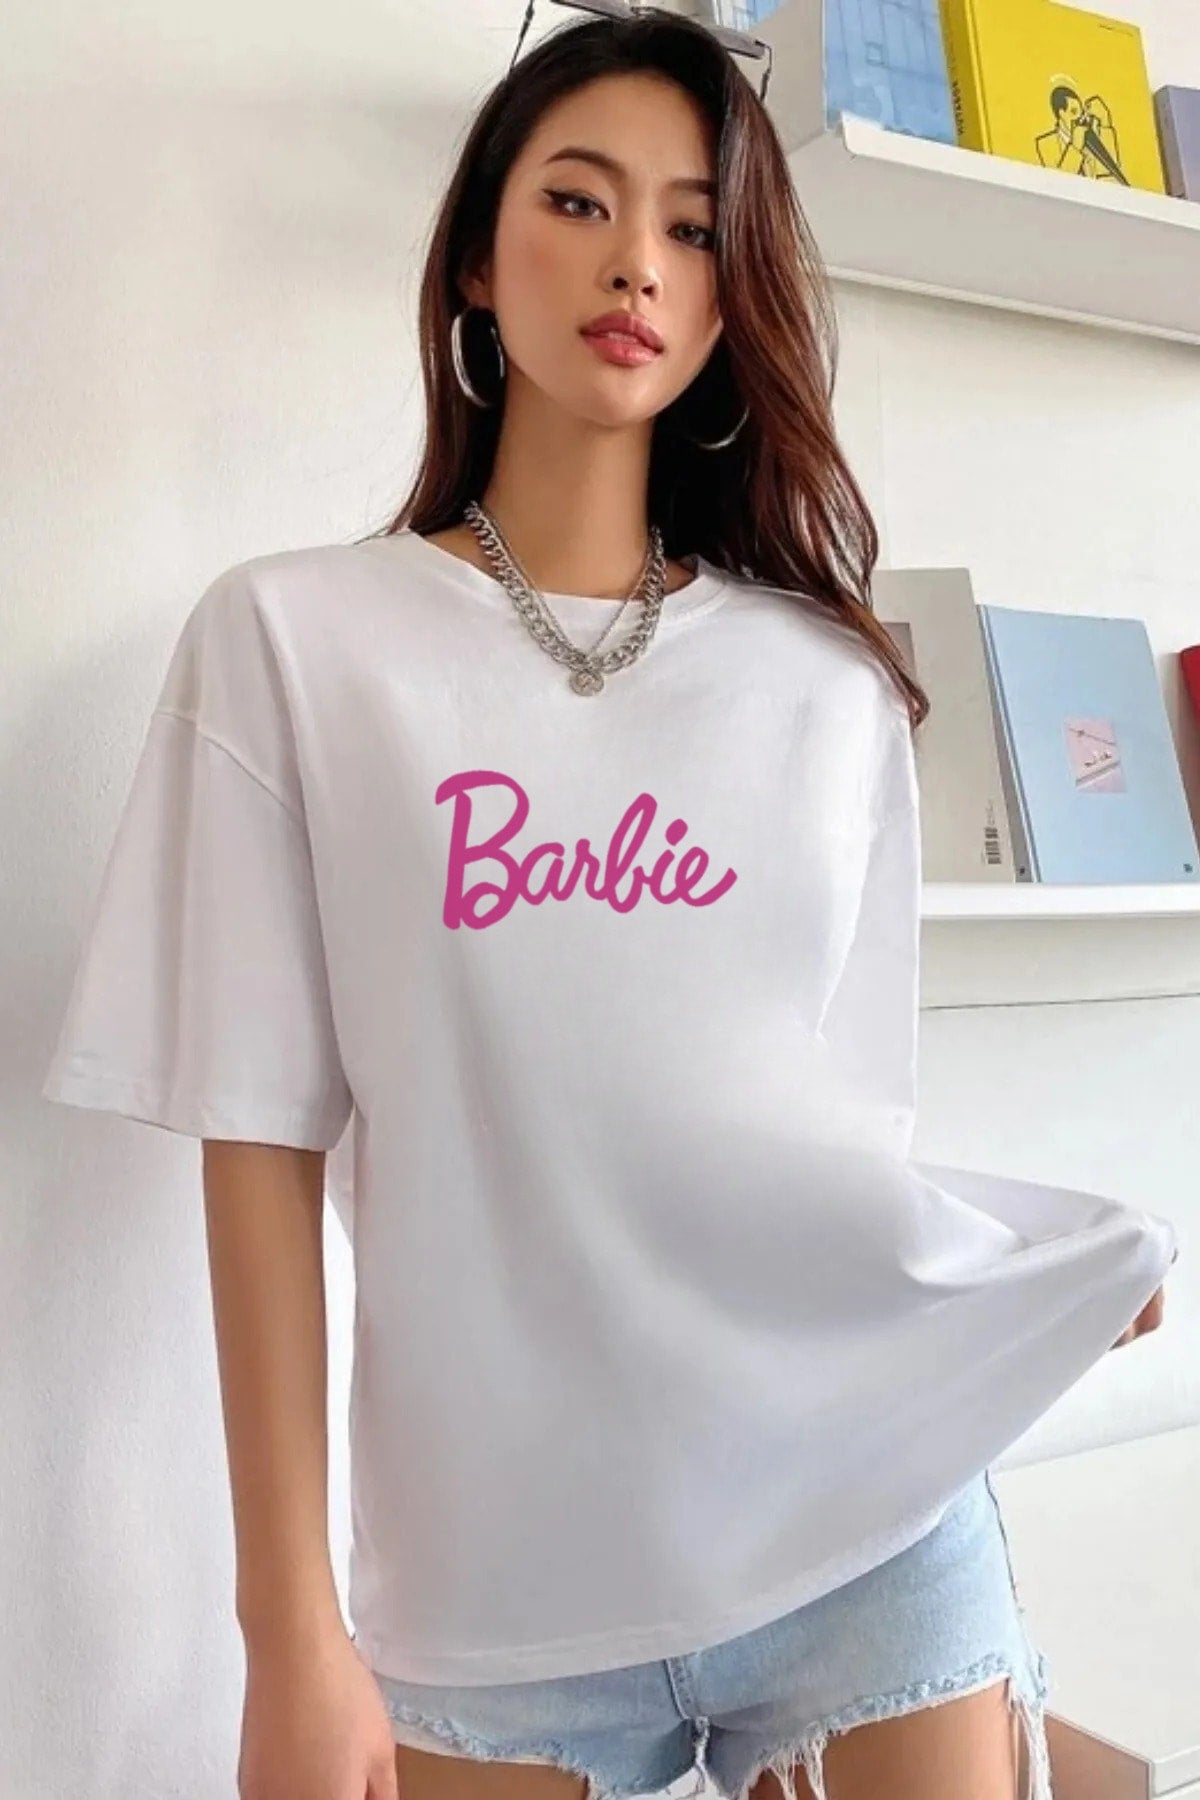 Barbie Printed Adult/Kids T-shirt